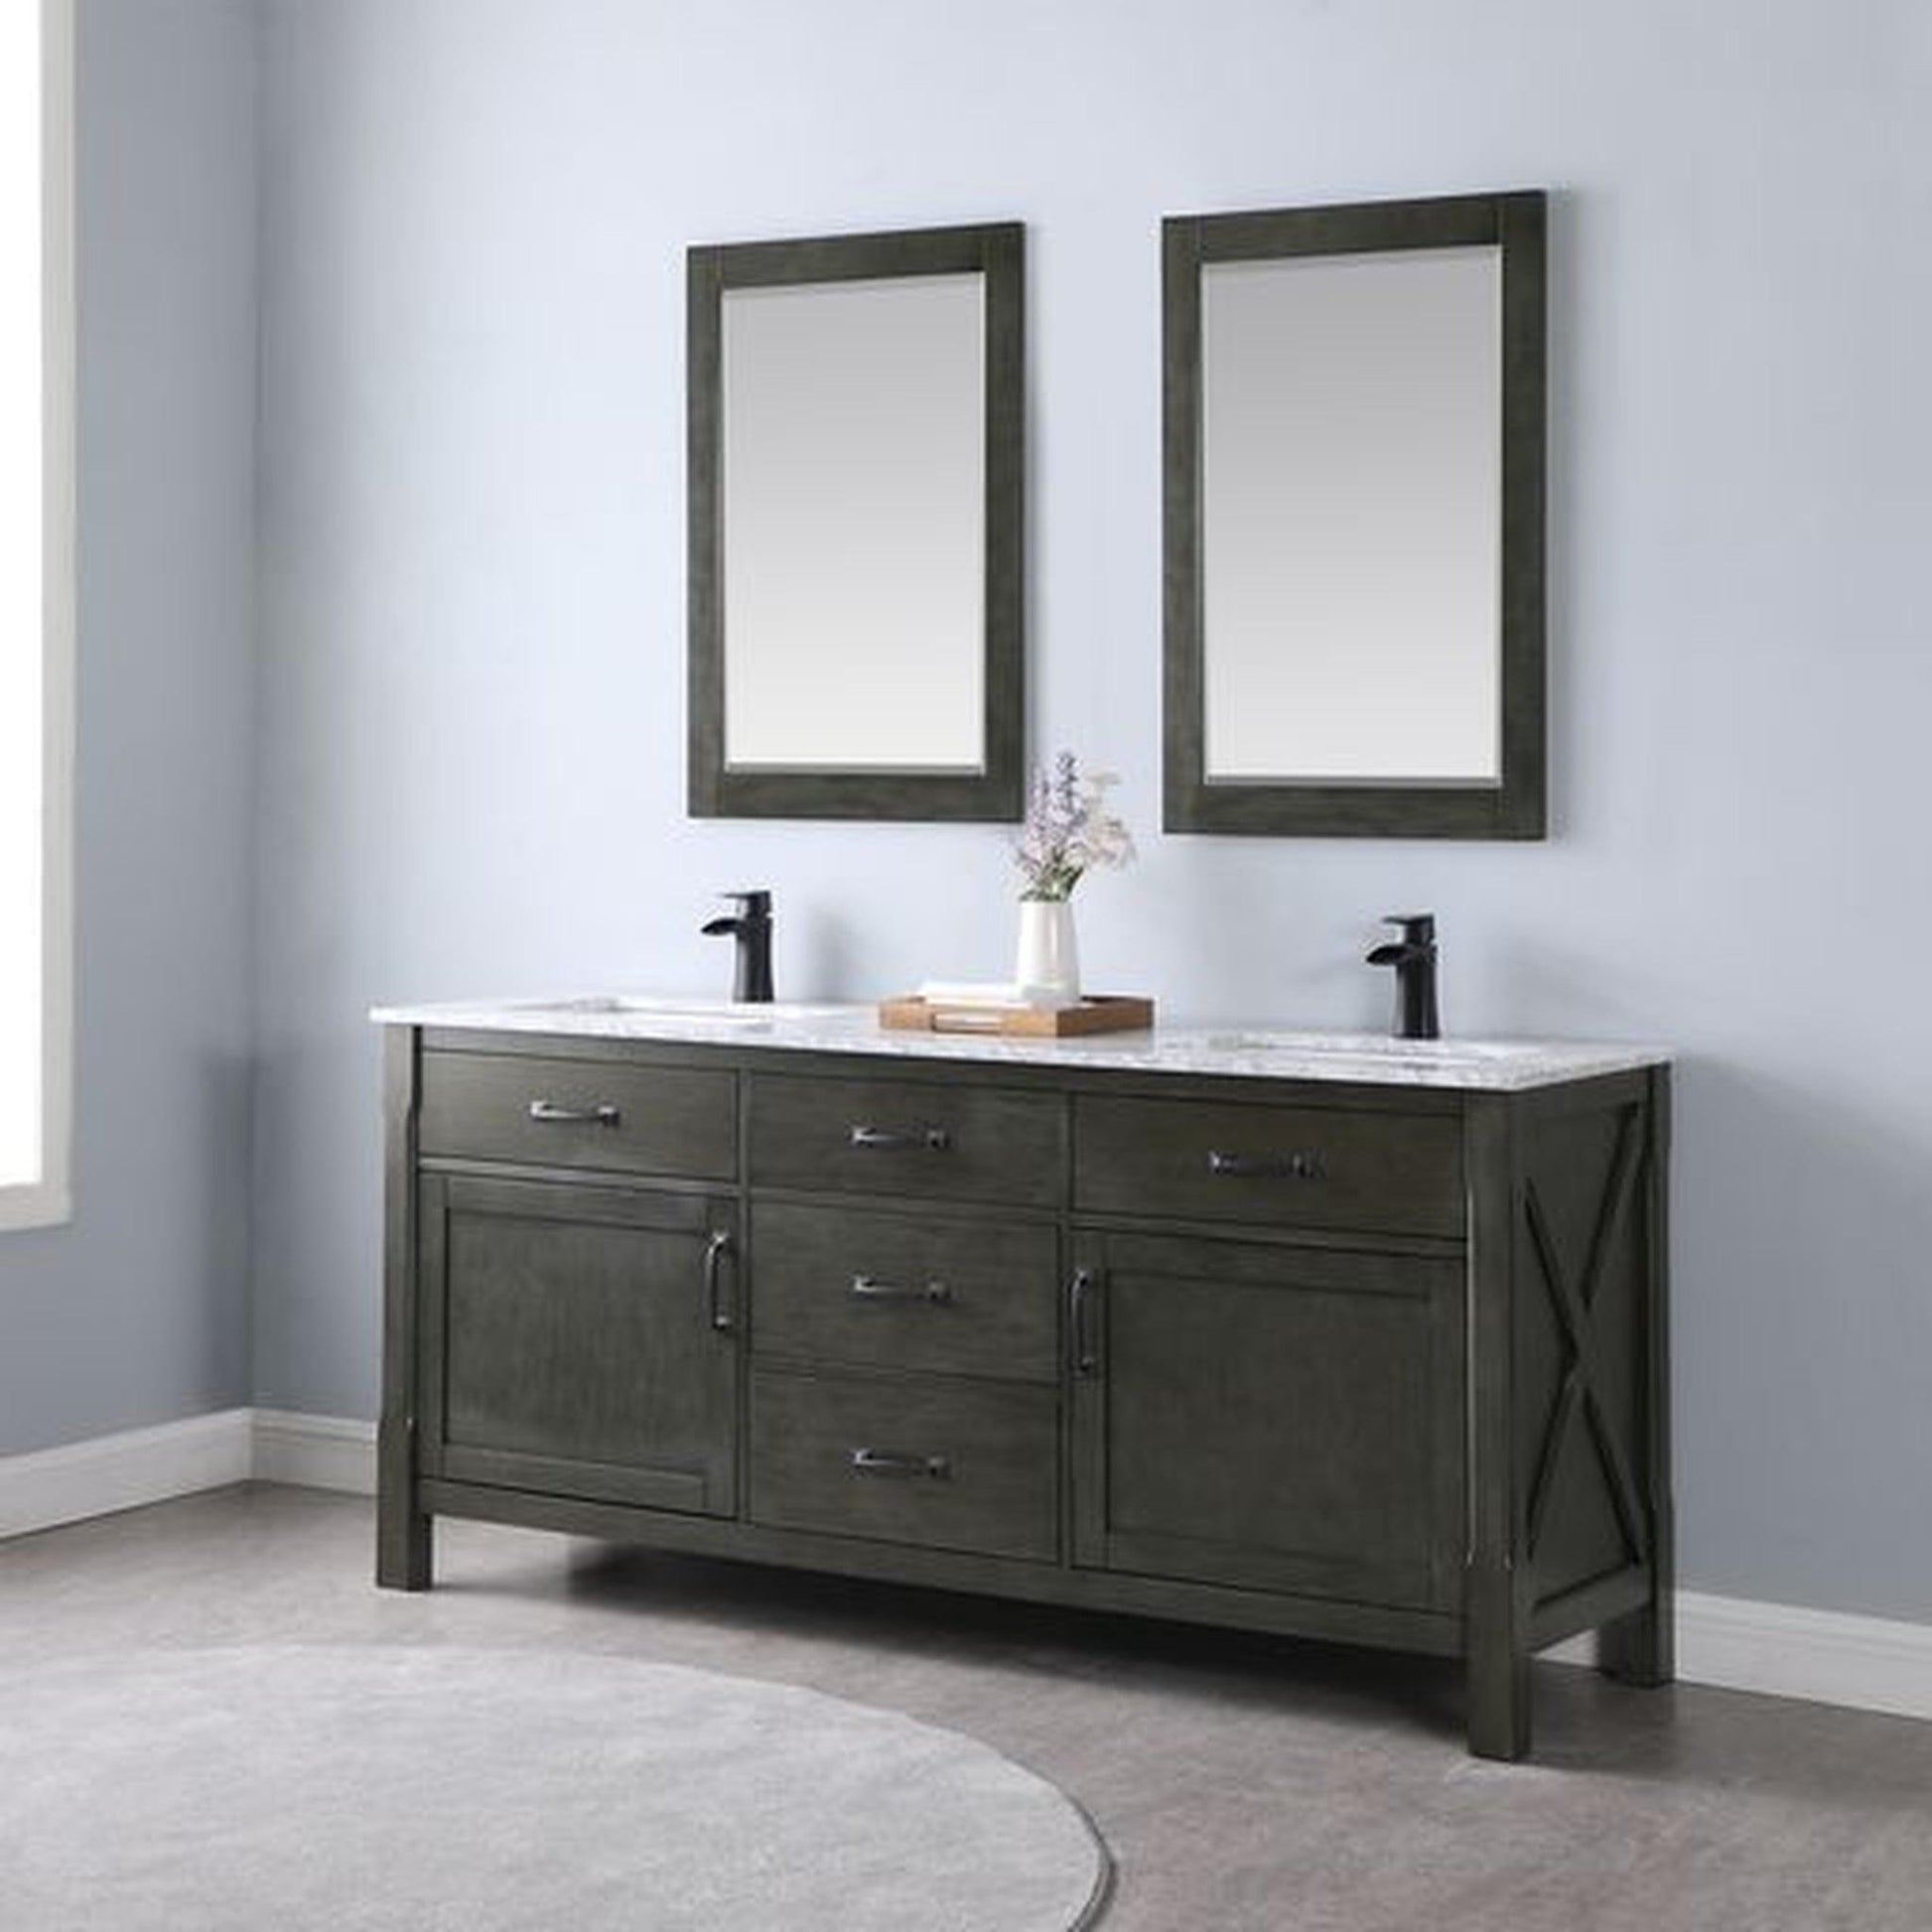 Altair Maribella 72" Double Rust Black Freestanding Bathroom Vanity Set With Mirror, Natural Carrara White Marble Top, Two Rectangular Undermount Ceramic Sinks, and Overflow